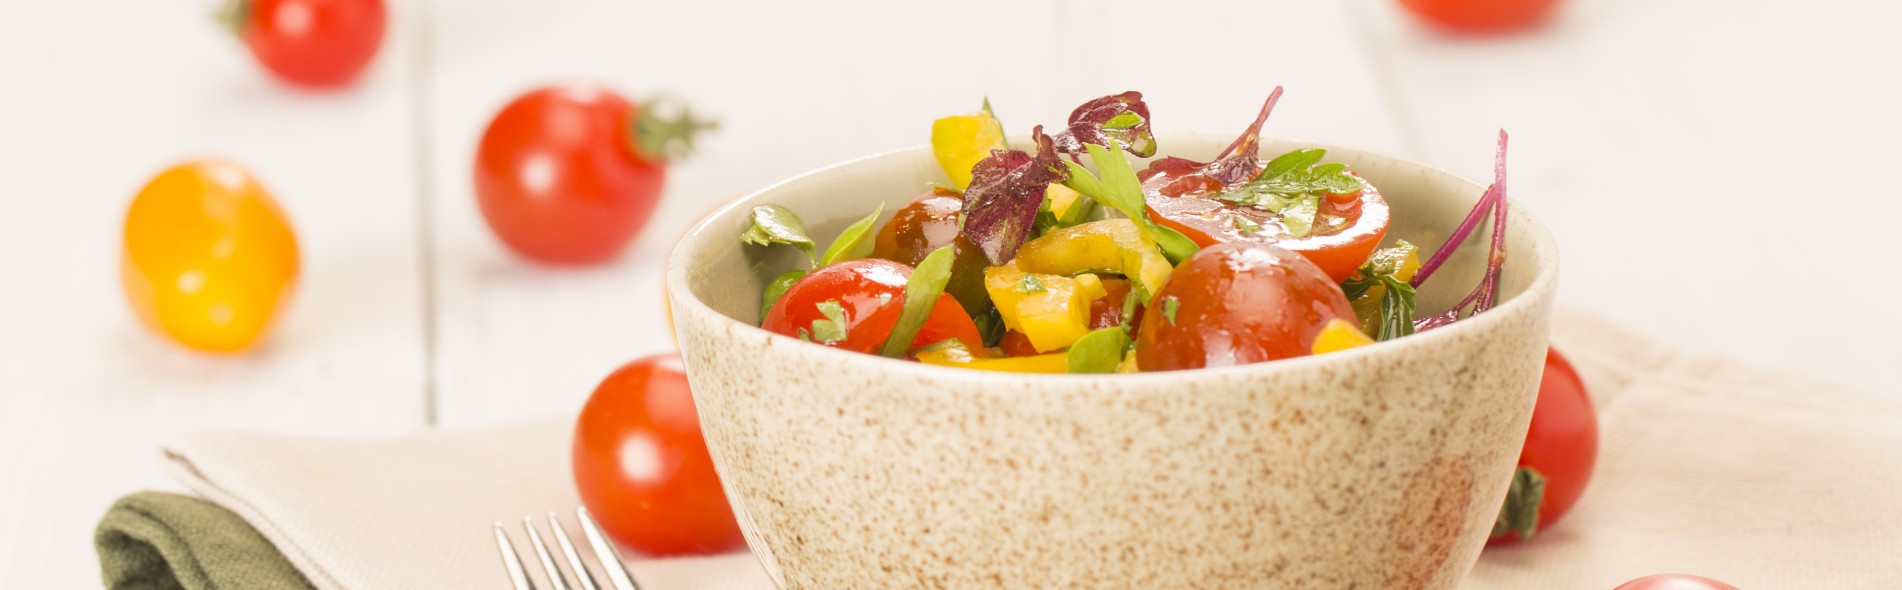 Tomatensalat mit scharfem Dressing | Love my Salad